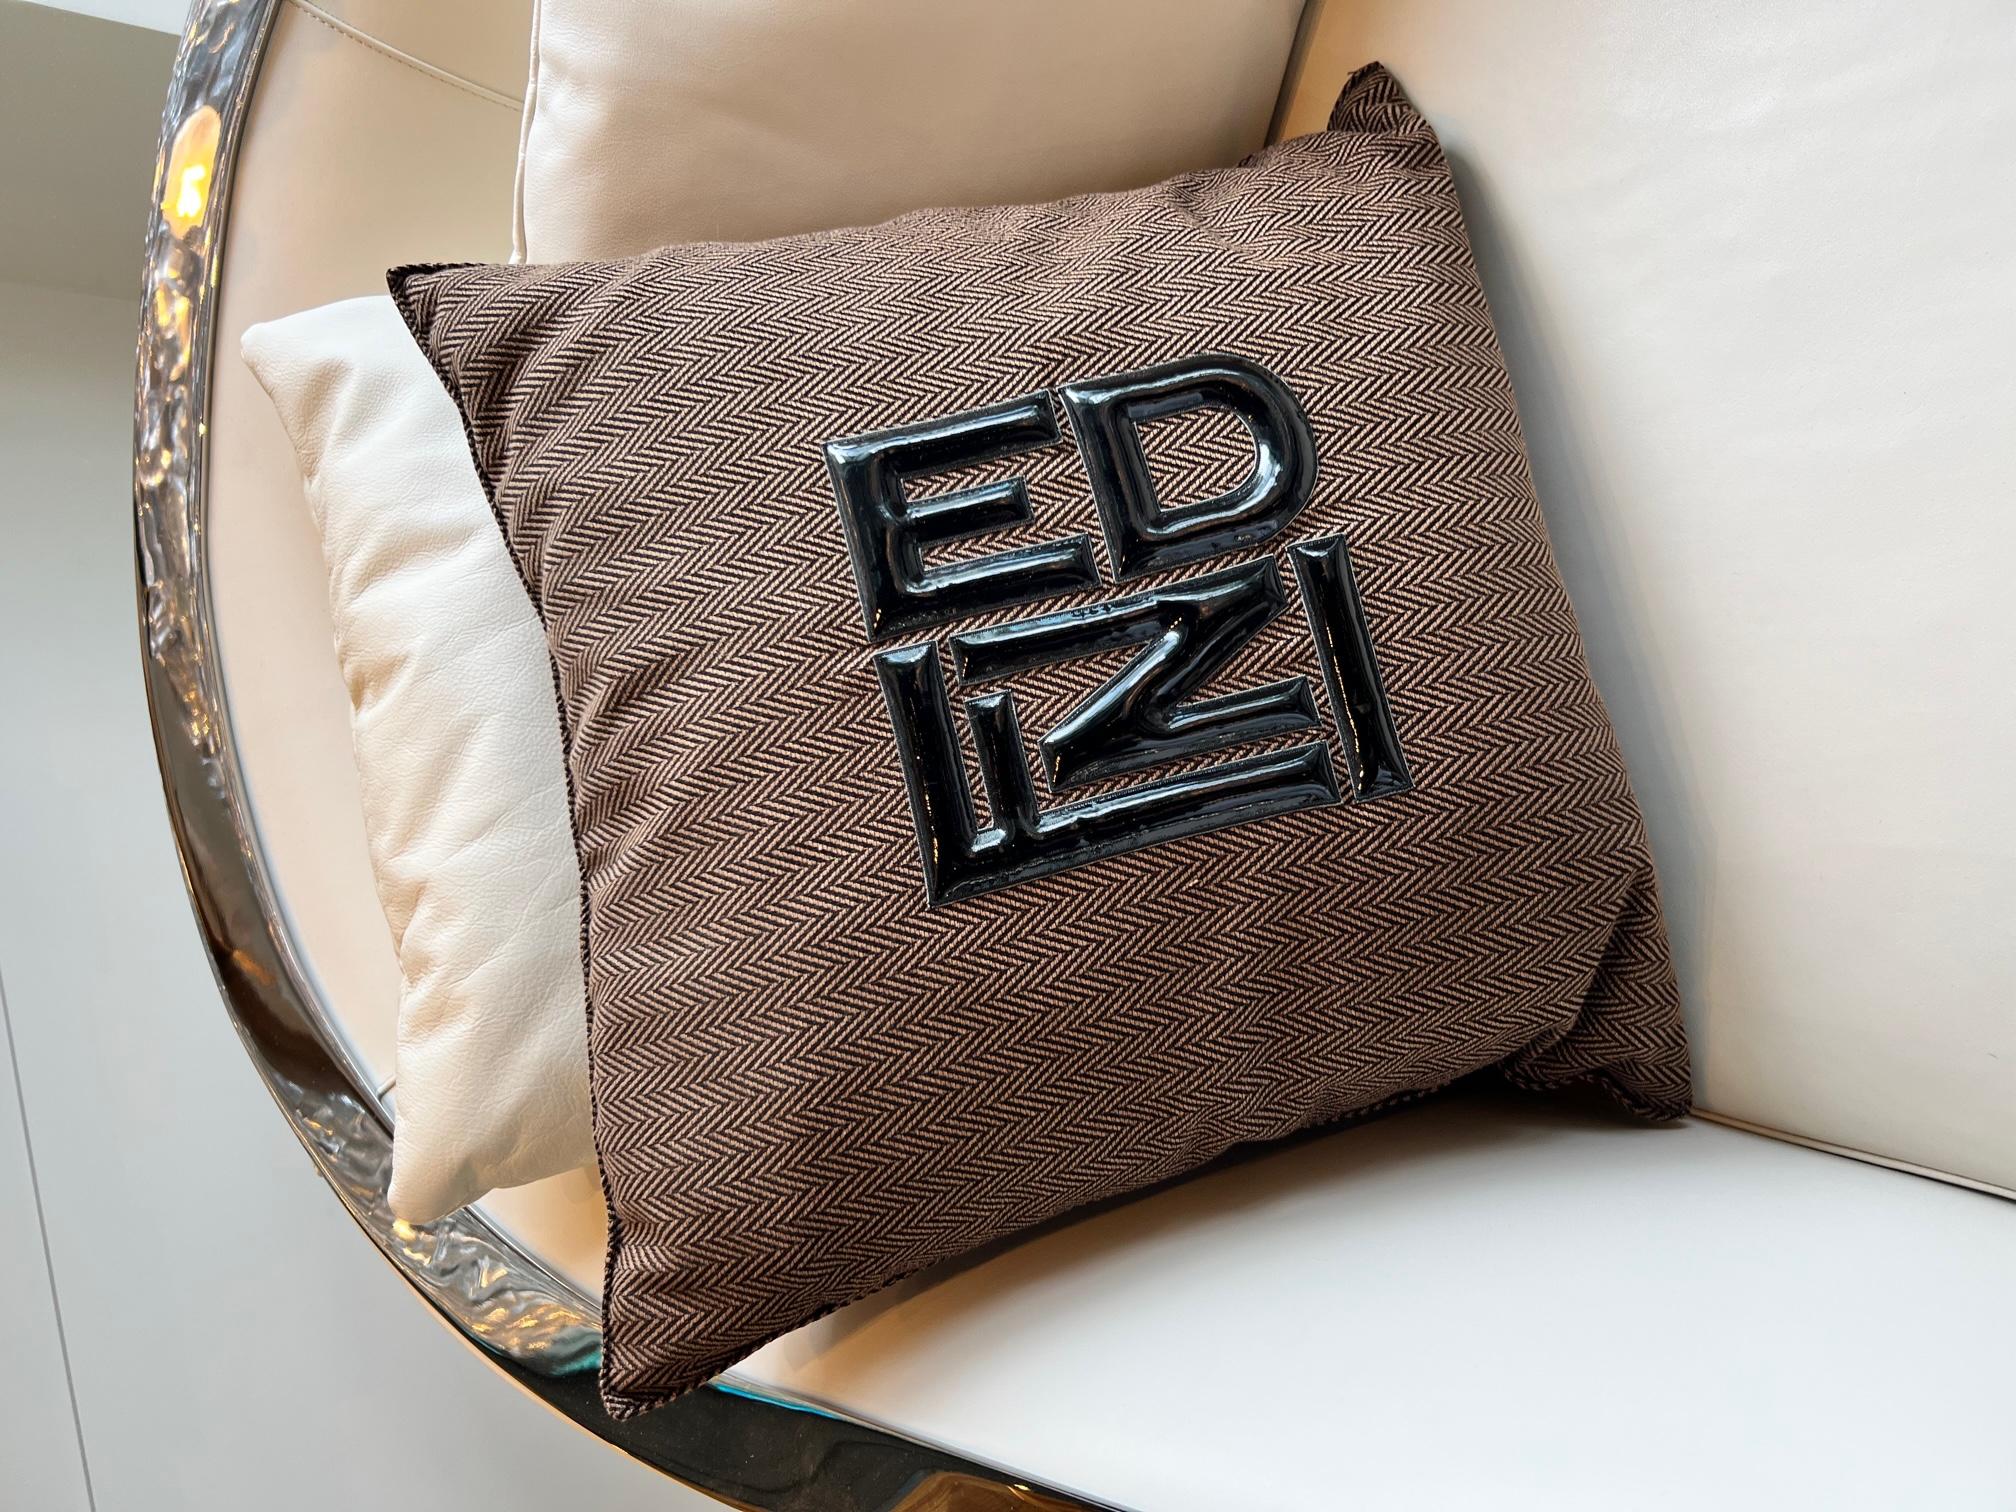 Chevron fabric cushion with patent leather black Fendi logo raised, with zipper bottom